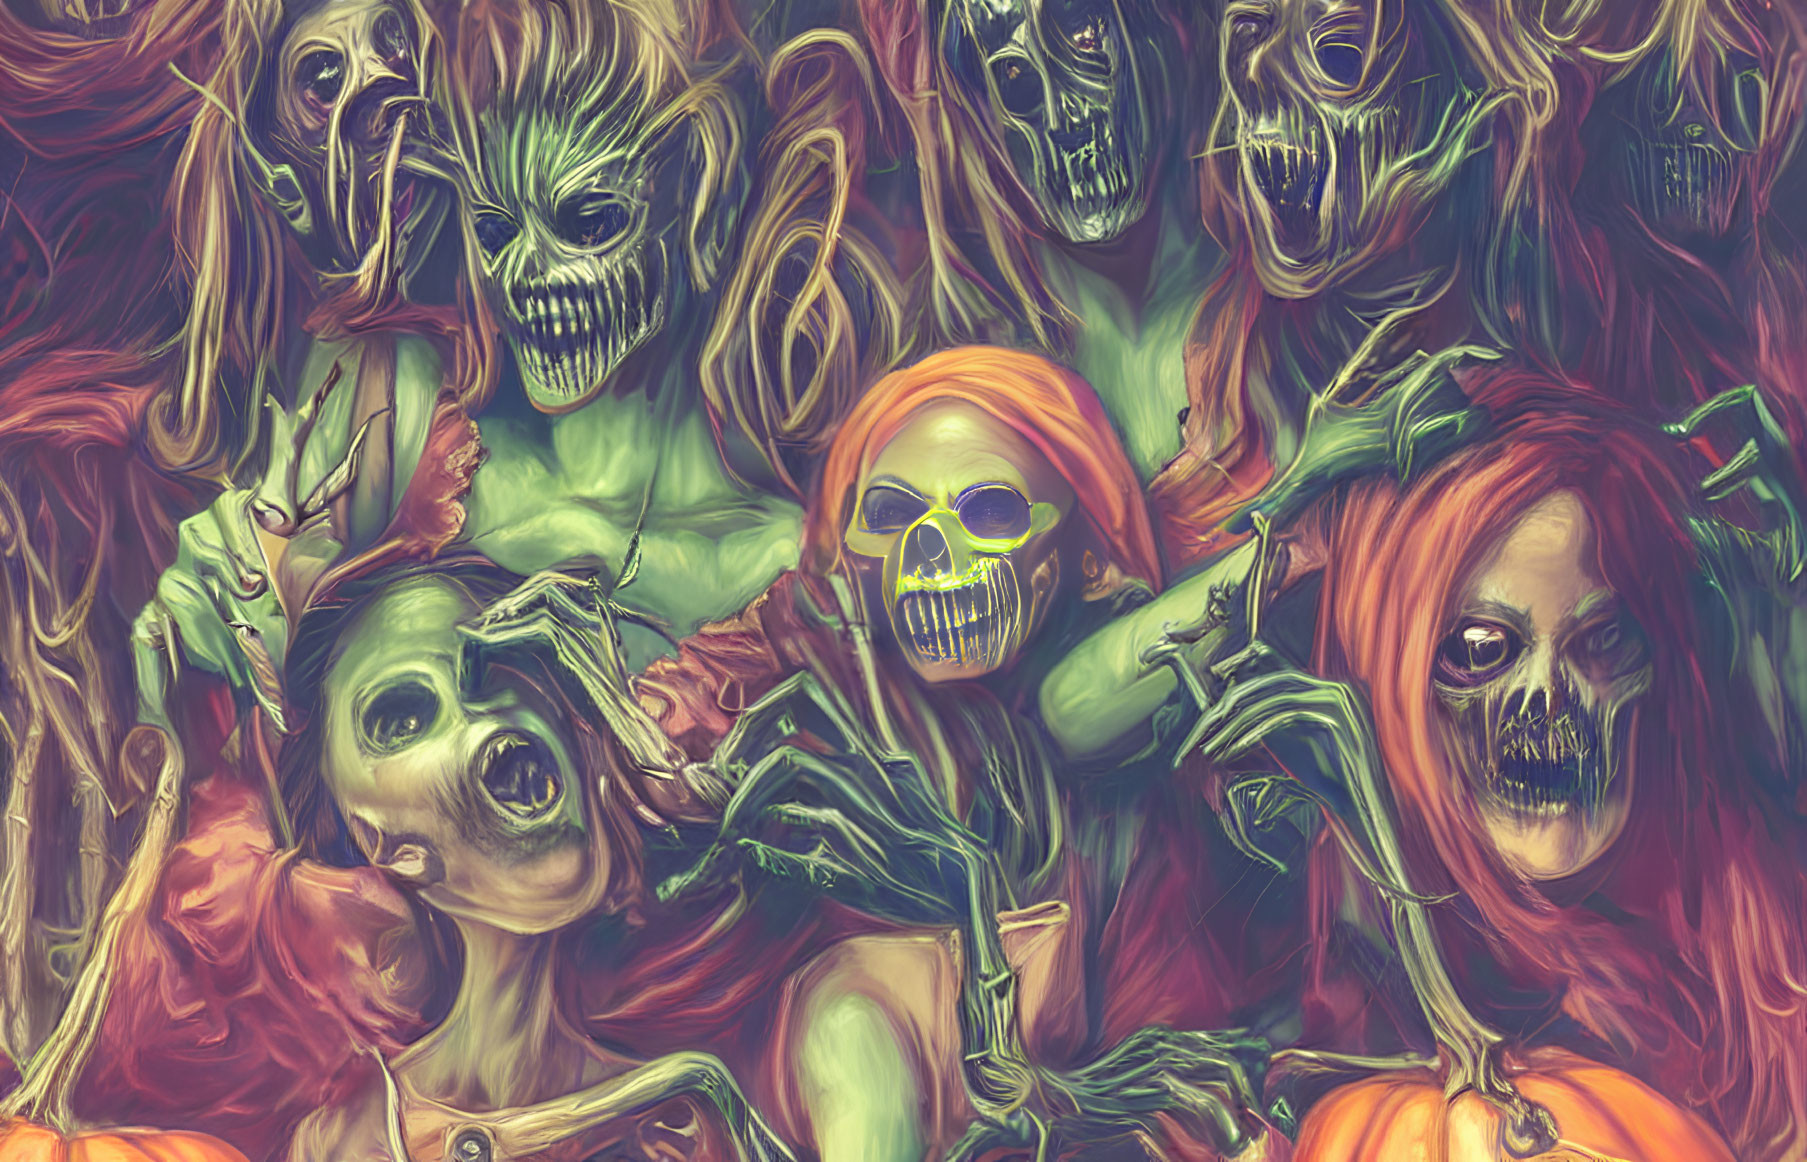 Vibrant Halloween illustration: Menacing zombies with glowing eyes and pumpkins in eerie mist